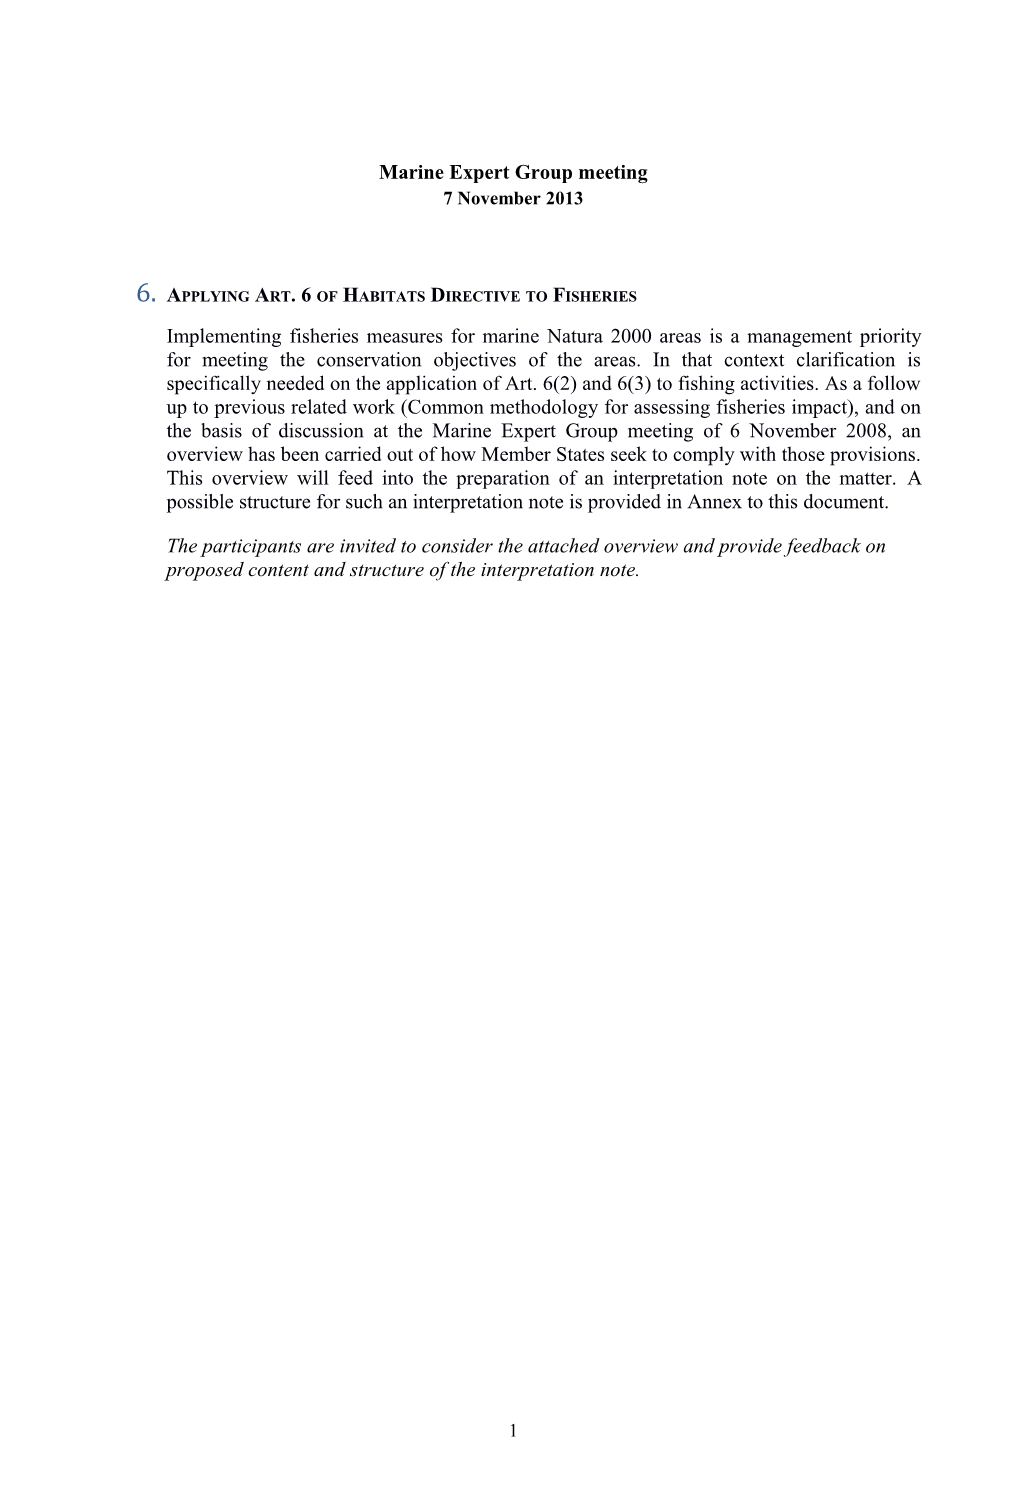 6.Applying Art. 6 of Habitats Directive to Fisheries